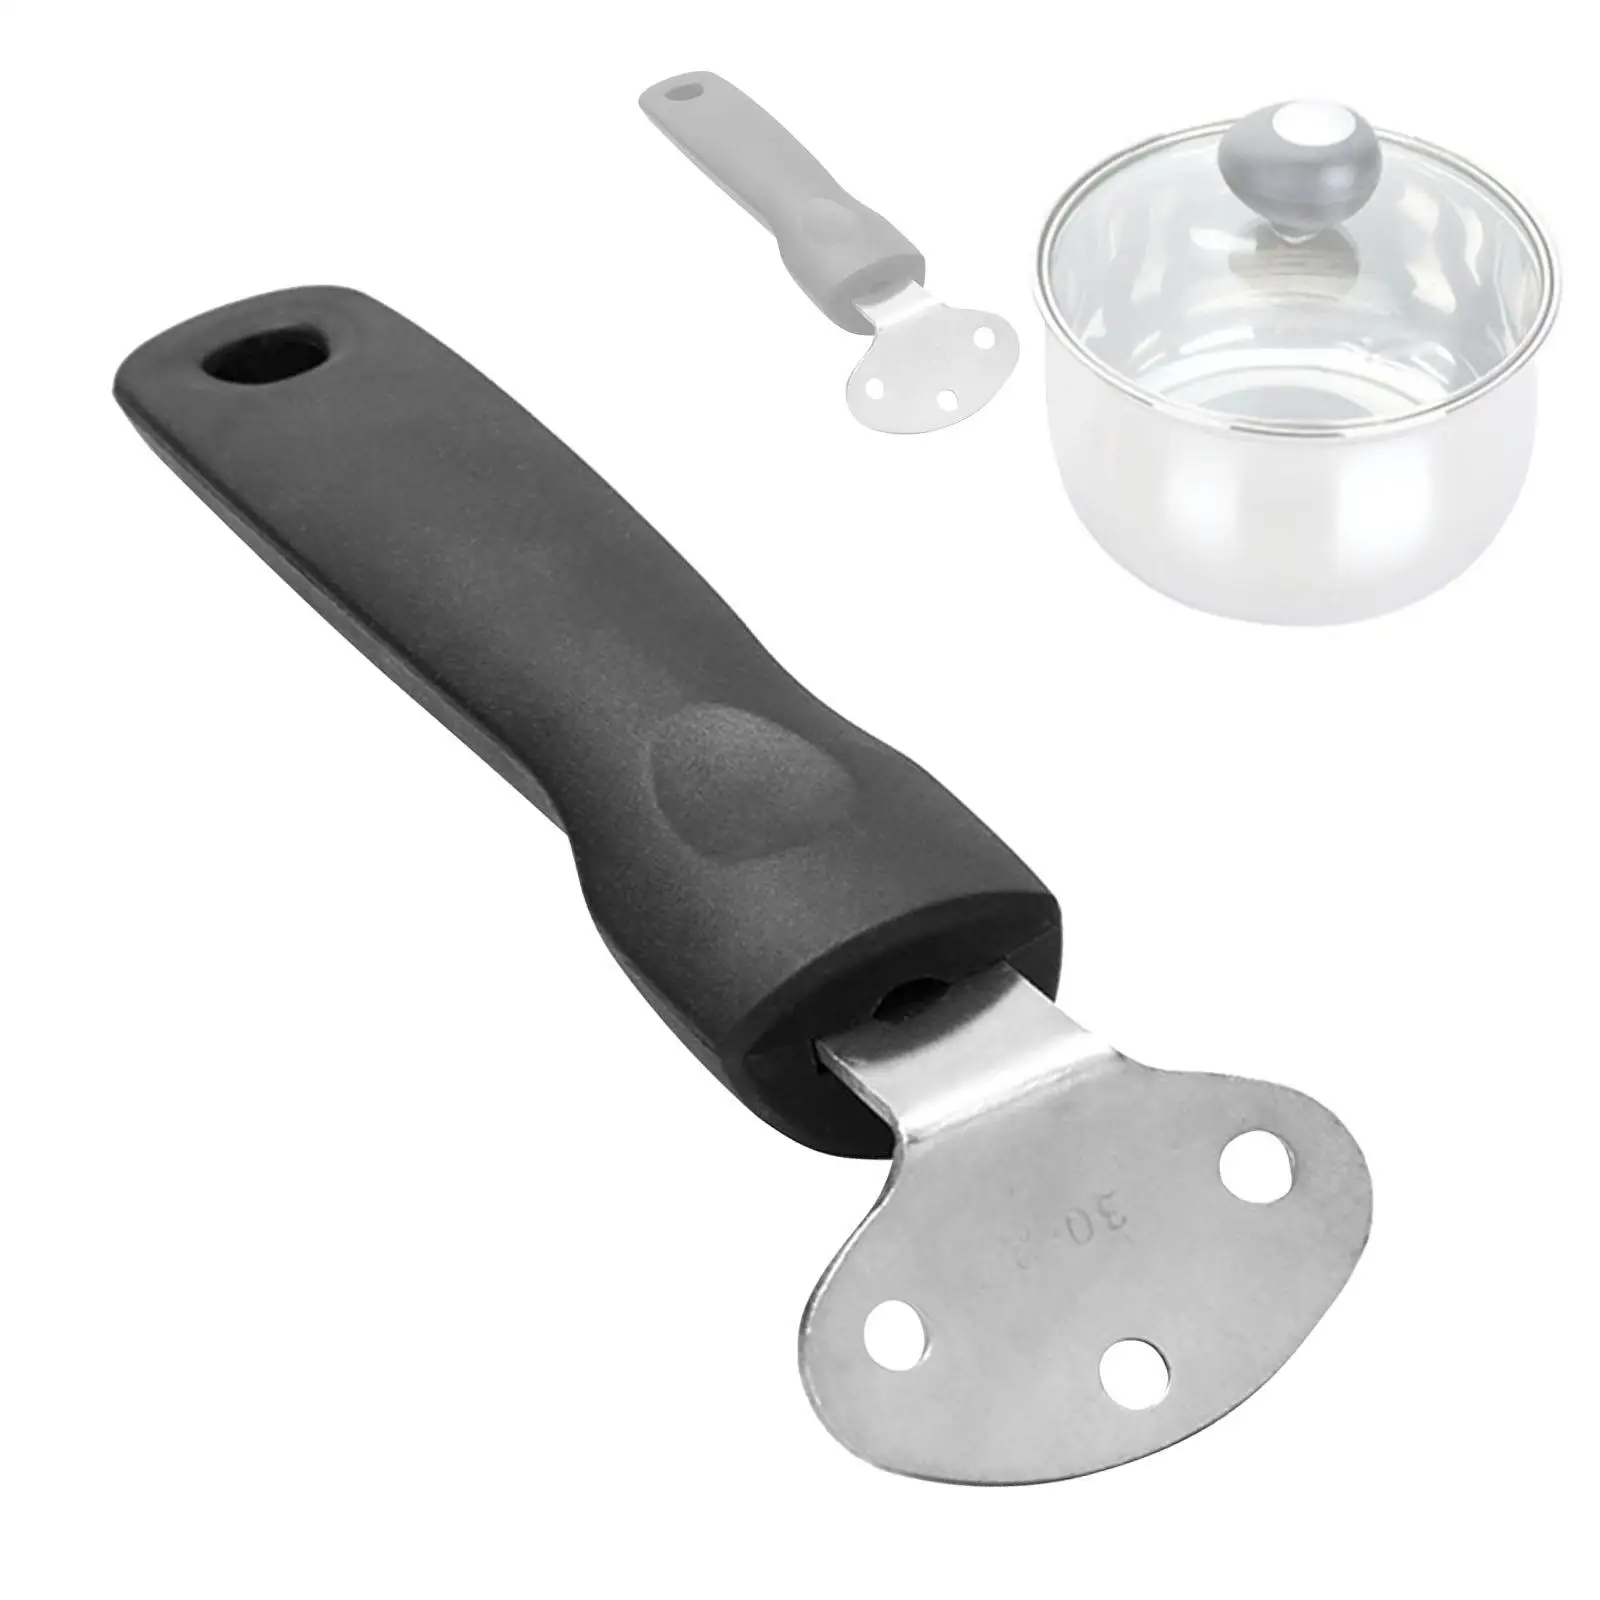 Replacement Pot Handle Pans Replacement Grip Handle Non Slip Handle Cookware Accessories Removable Handle for Pots Woks Pans